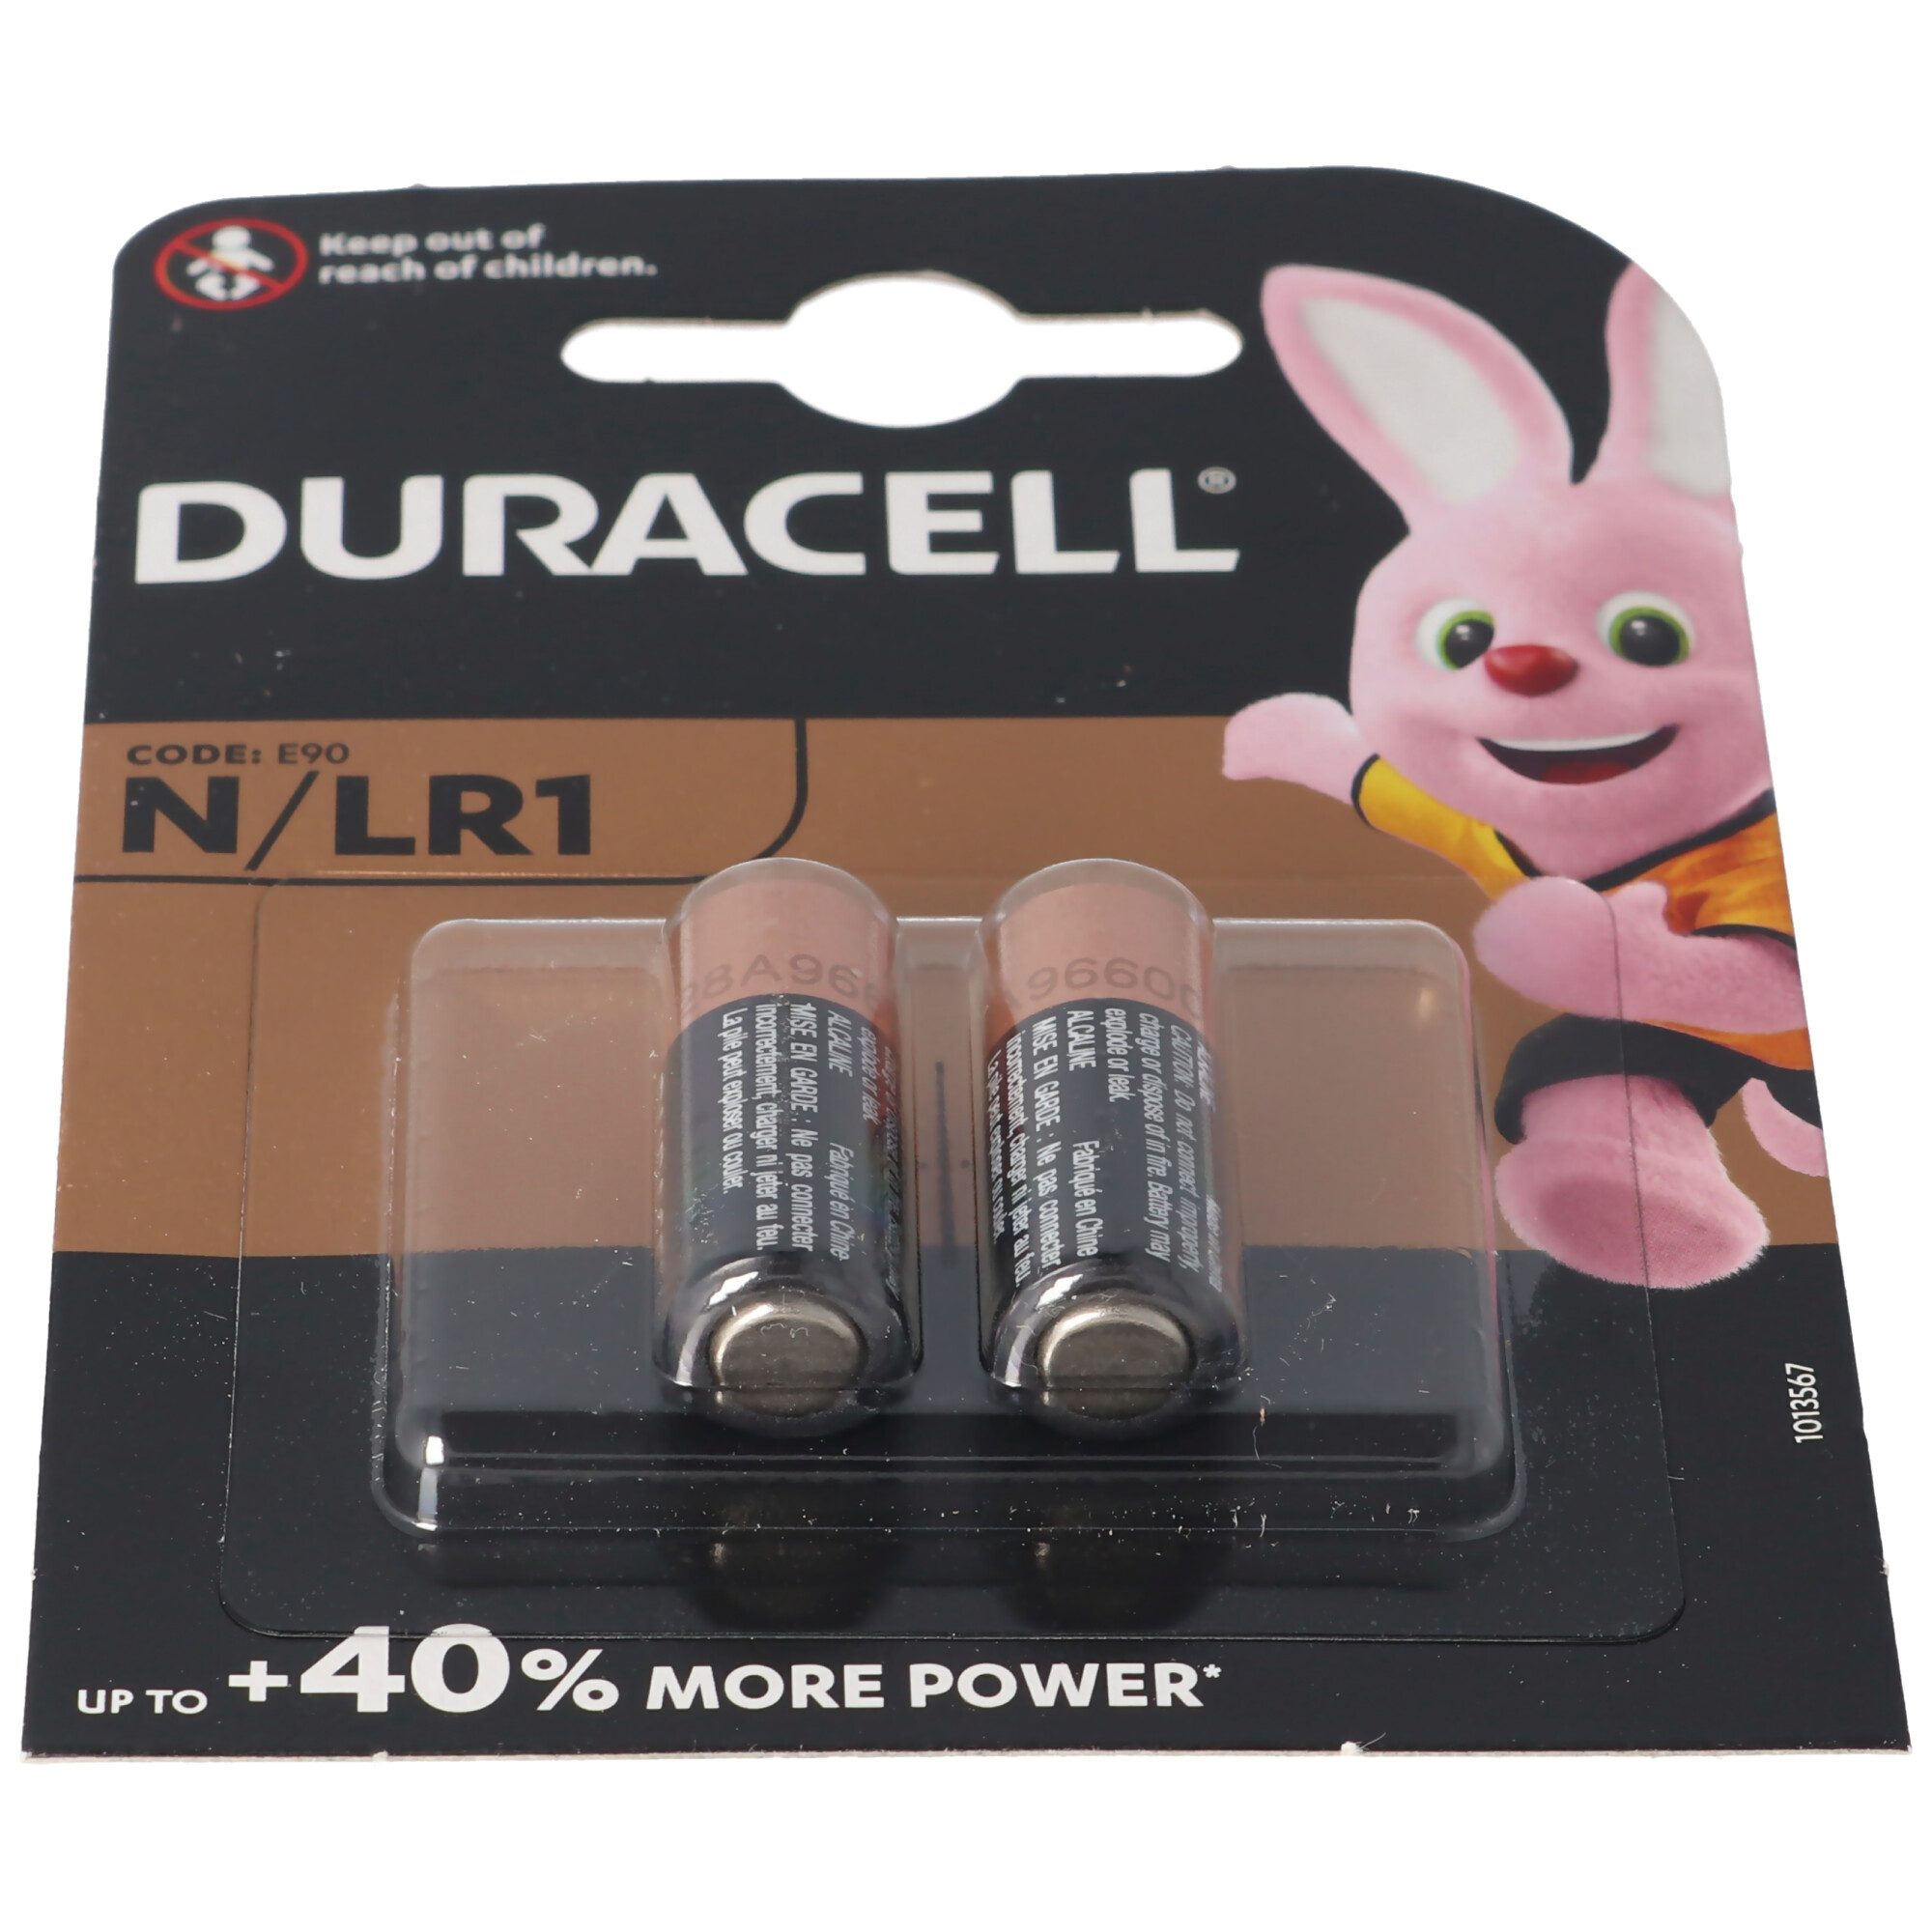 Duracell MN9100 Alkaline Batterie Lady LR1 Size N 1,5 Volt Batterie UM5, UM-5 2 Stück